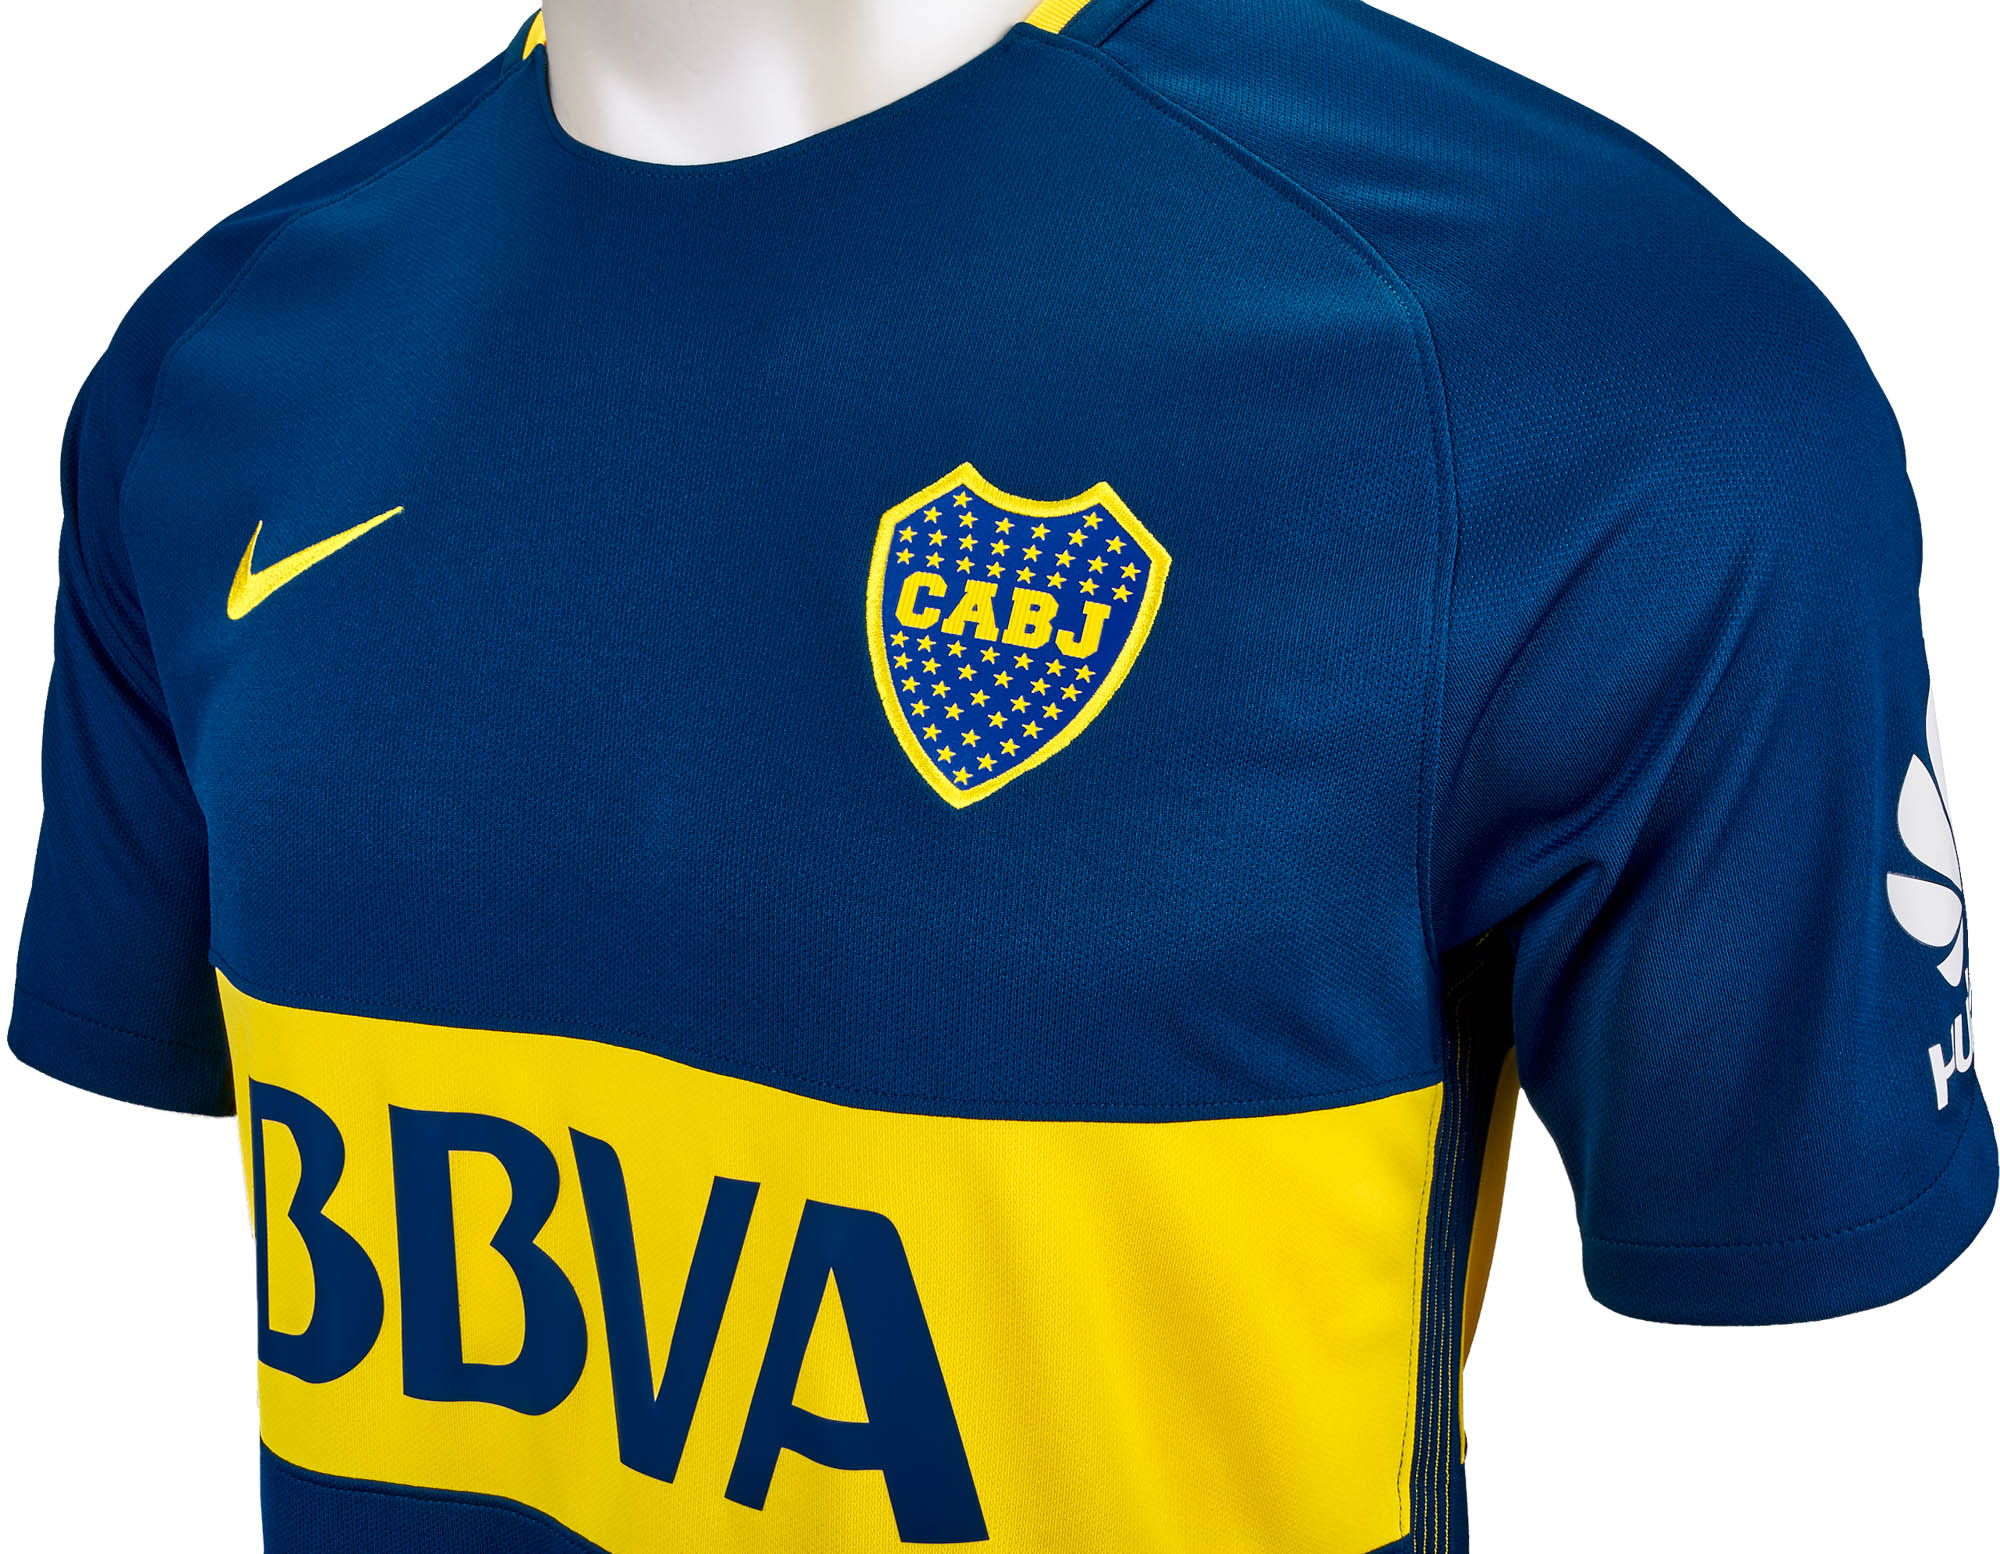 Nike Boca Juniors Home Jersey 17/18 - Boca Juniors Gear